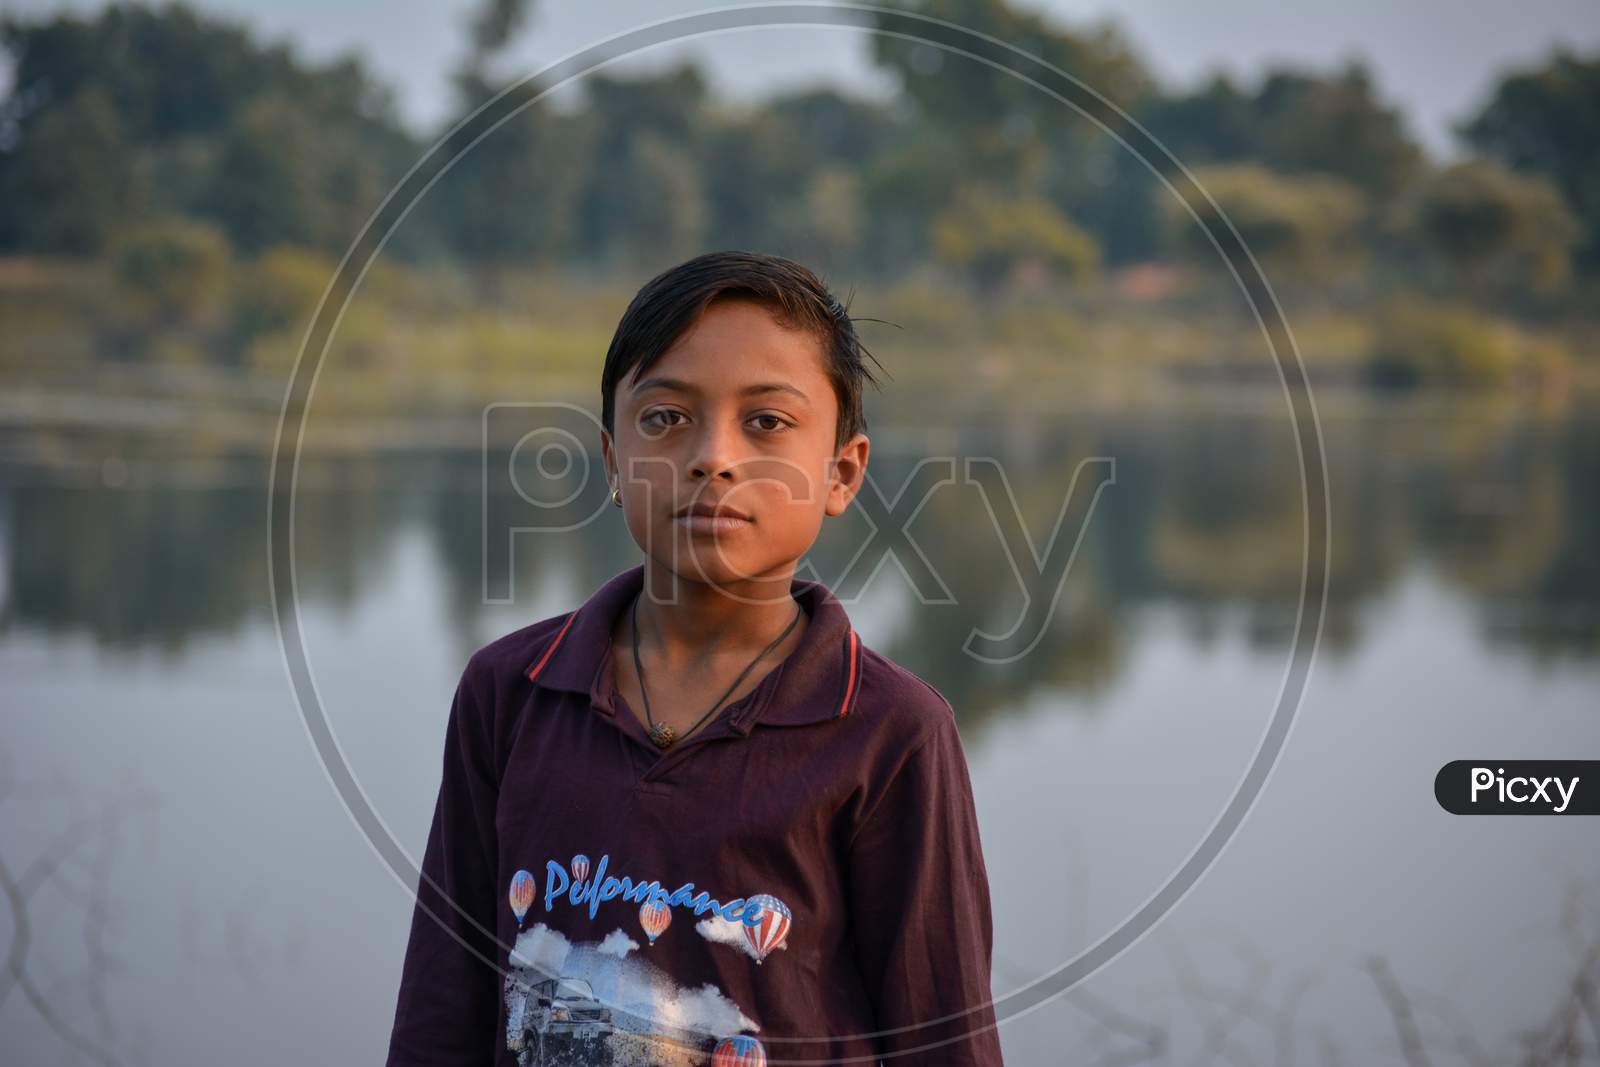 TIKAMGARH, MADHYA PRADESH, INDIA - NOVEMBER 13, 2019: Indian kid looking curious into the camera.